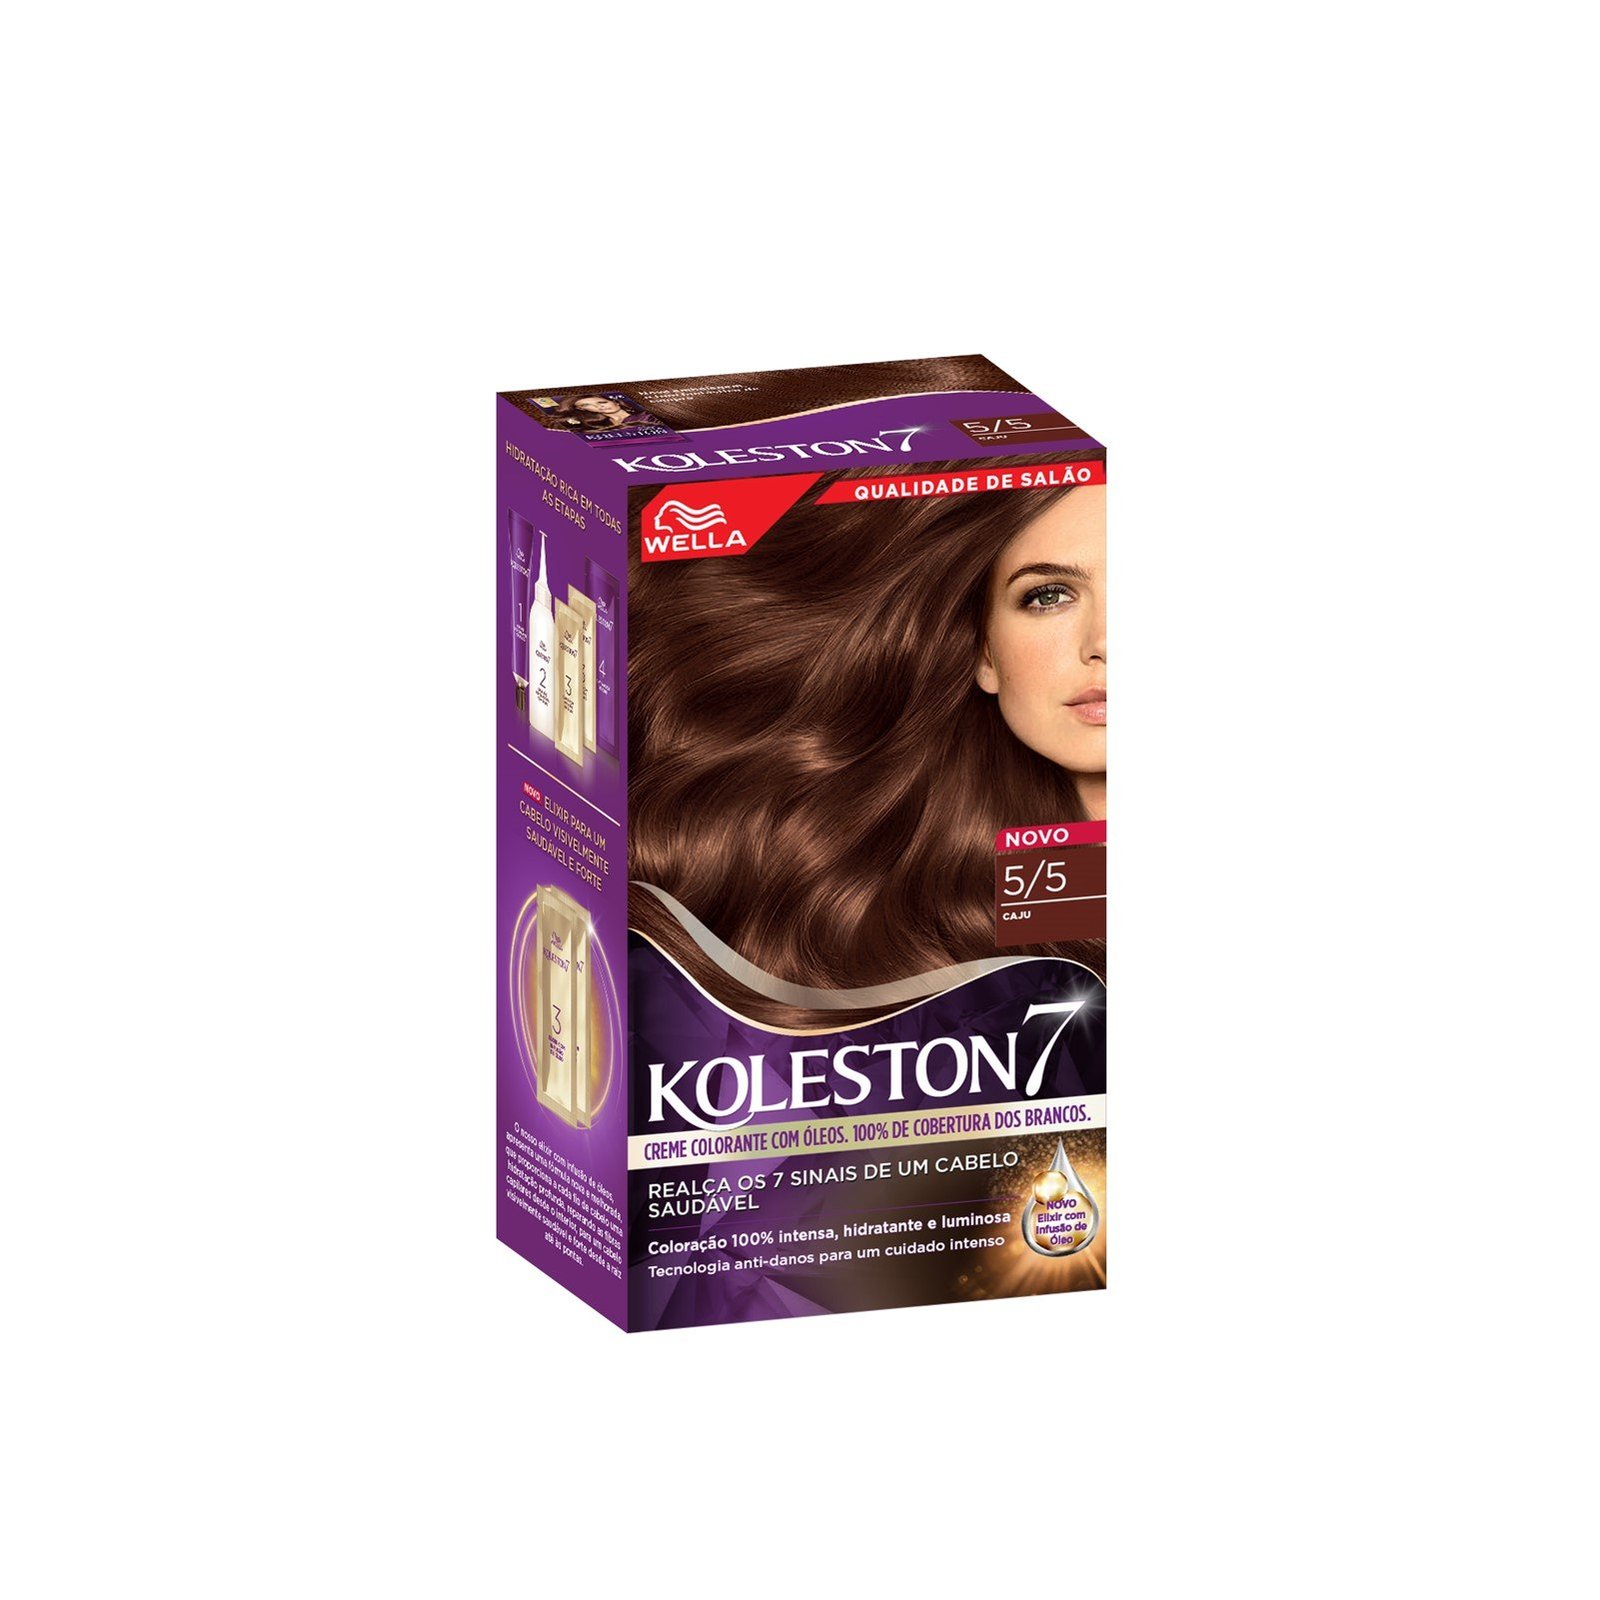 Wella Koleston 5/5 Mahogany Permanent Hair Color